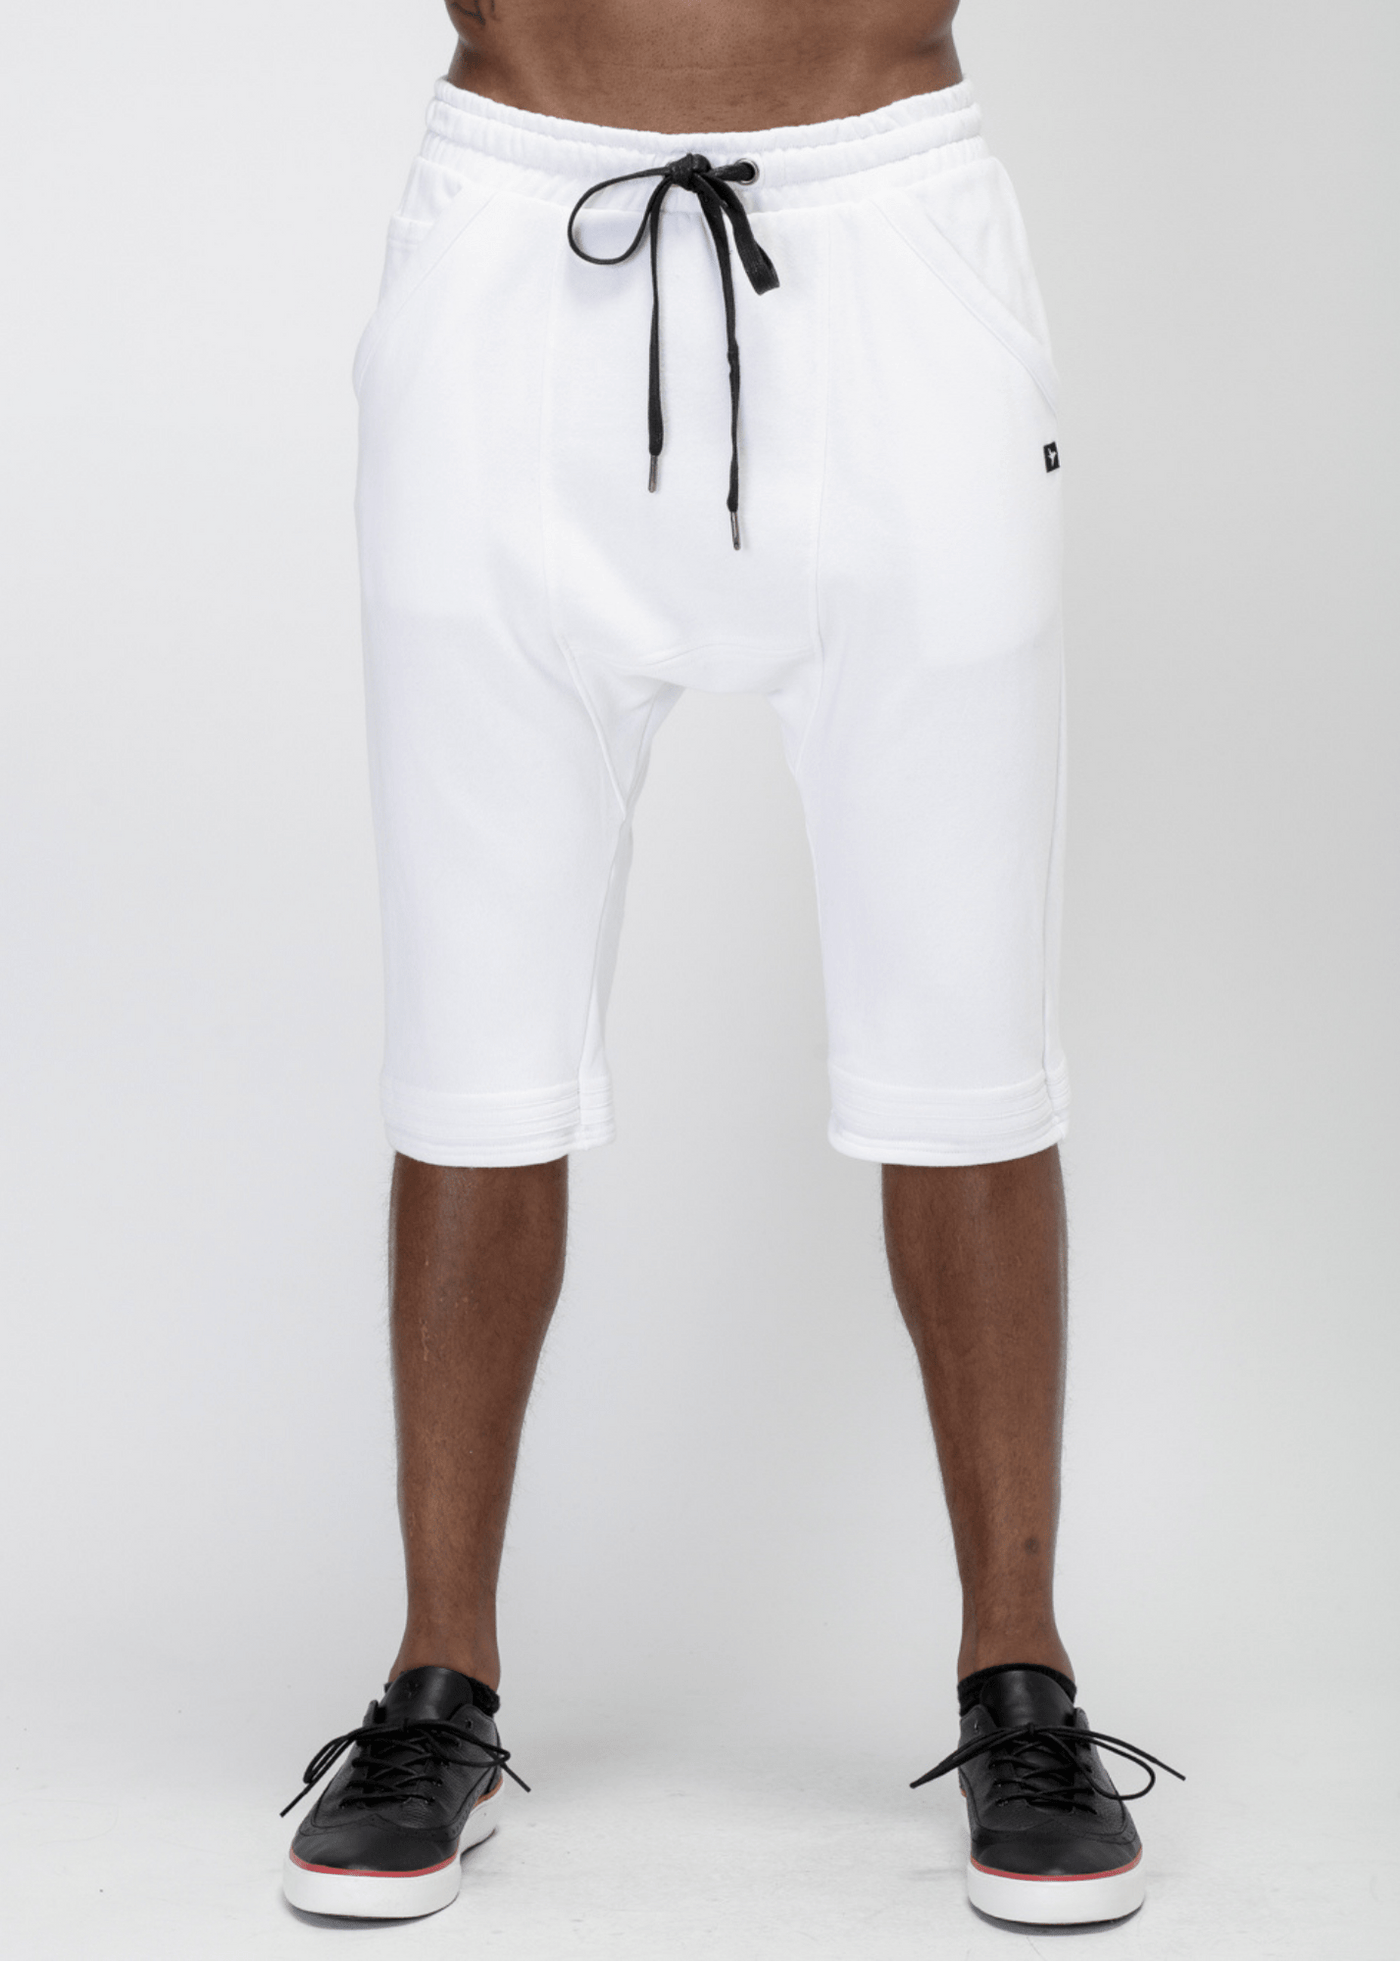 Konus Men's Loose End Shorts in White by Shop at Konus